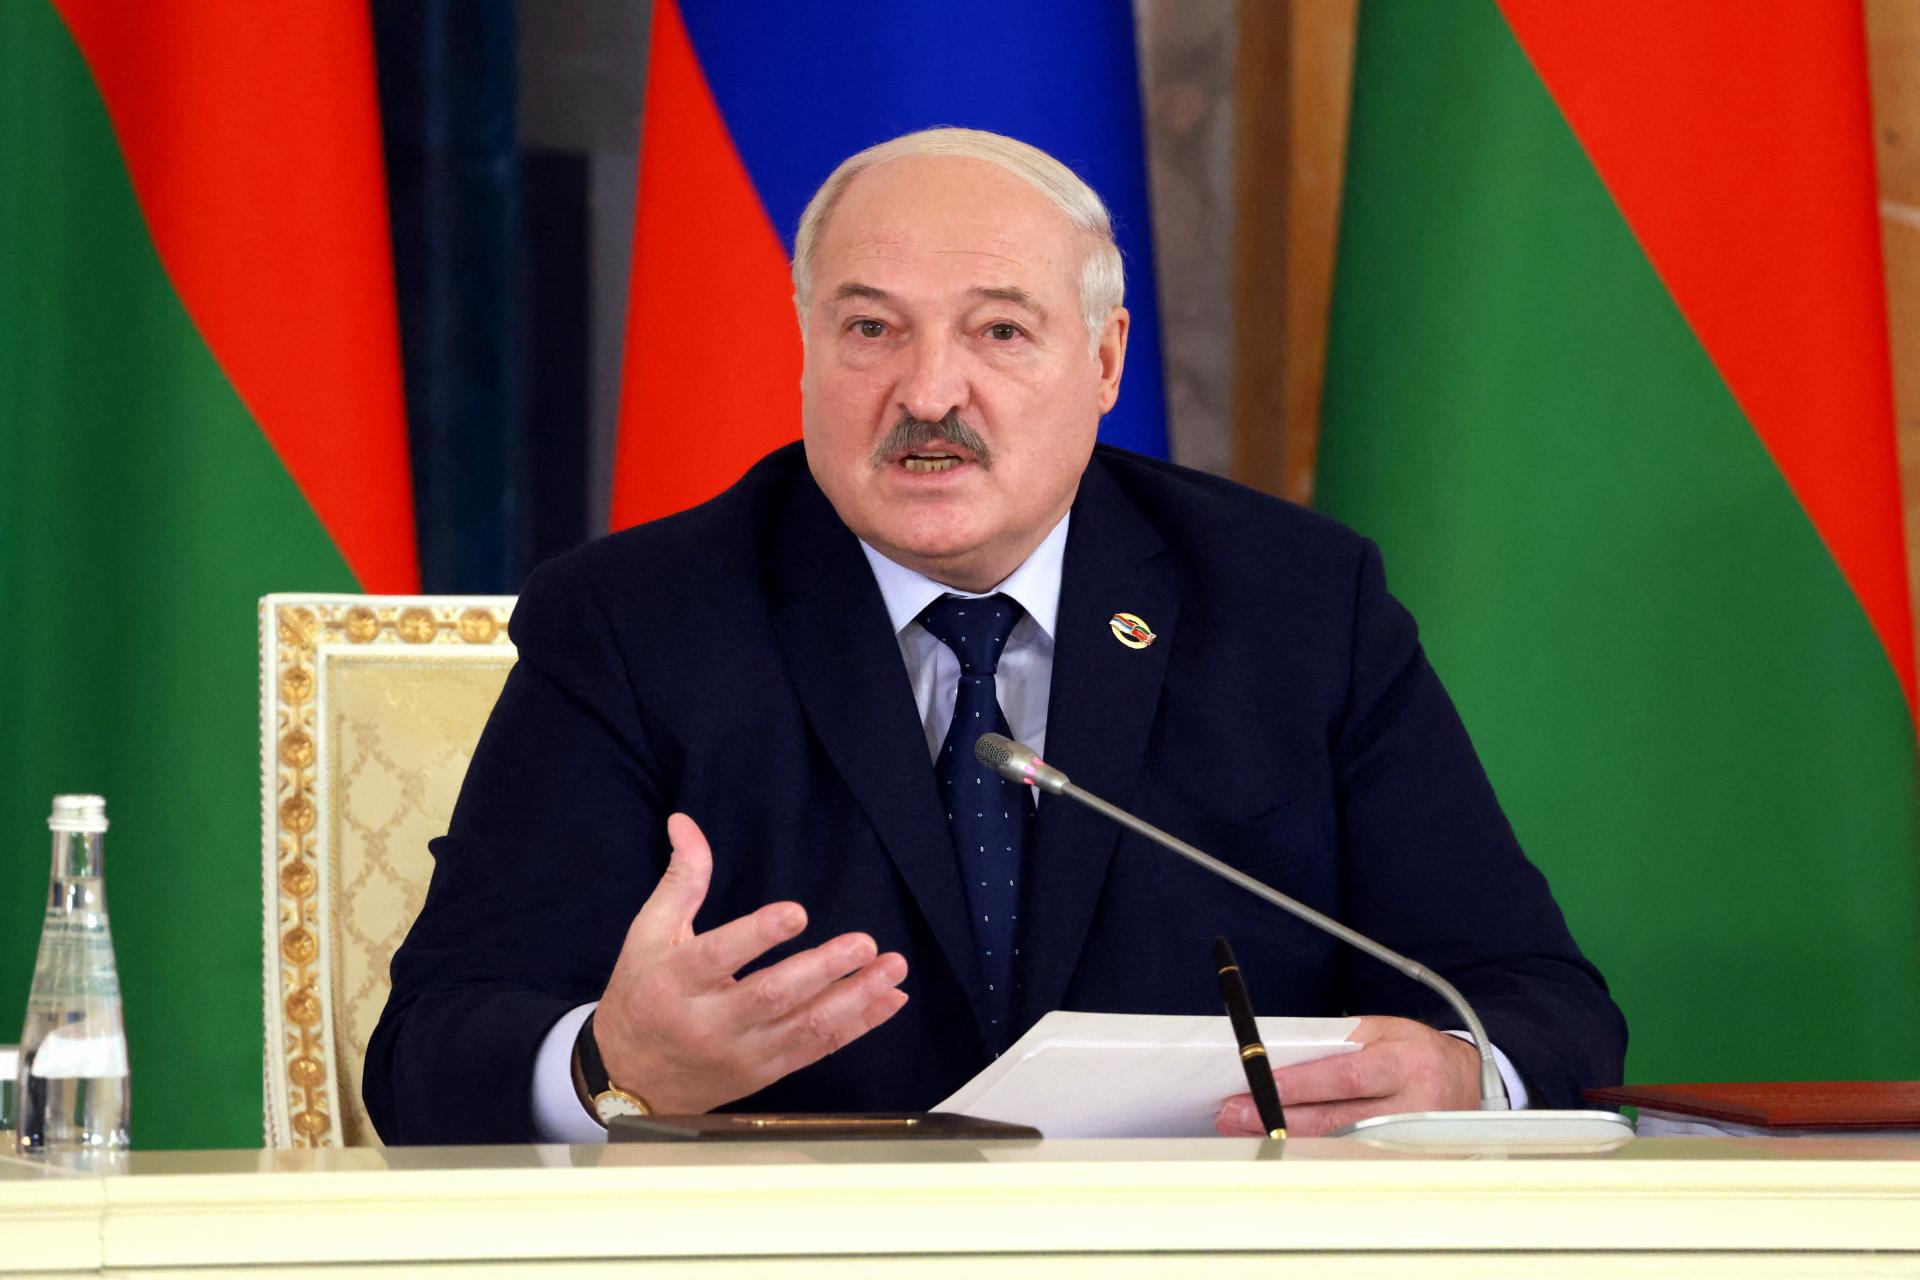 Hospodársky zázrak uťal sám Lukašenko. Exodus mladých devastuje ekonomiku, bez pomoci Moskvy by skolabovala